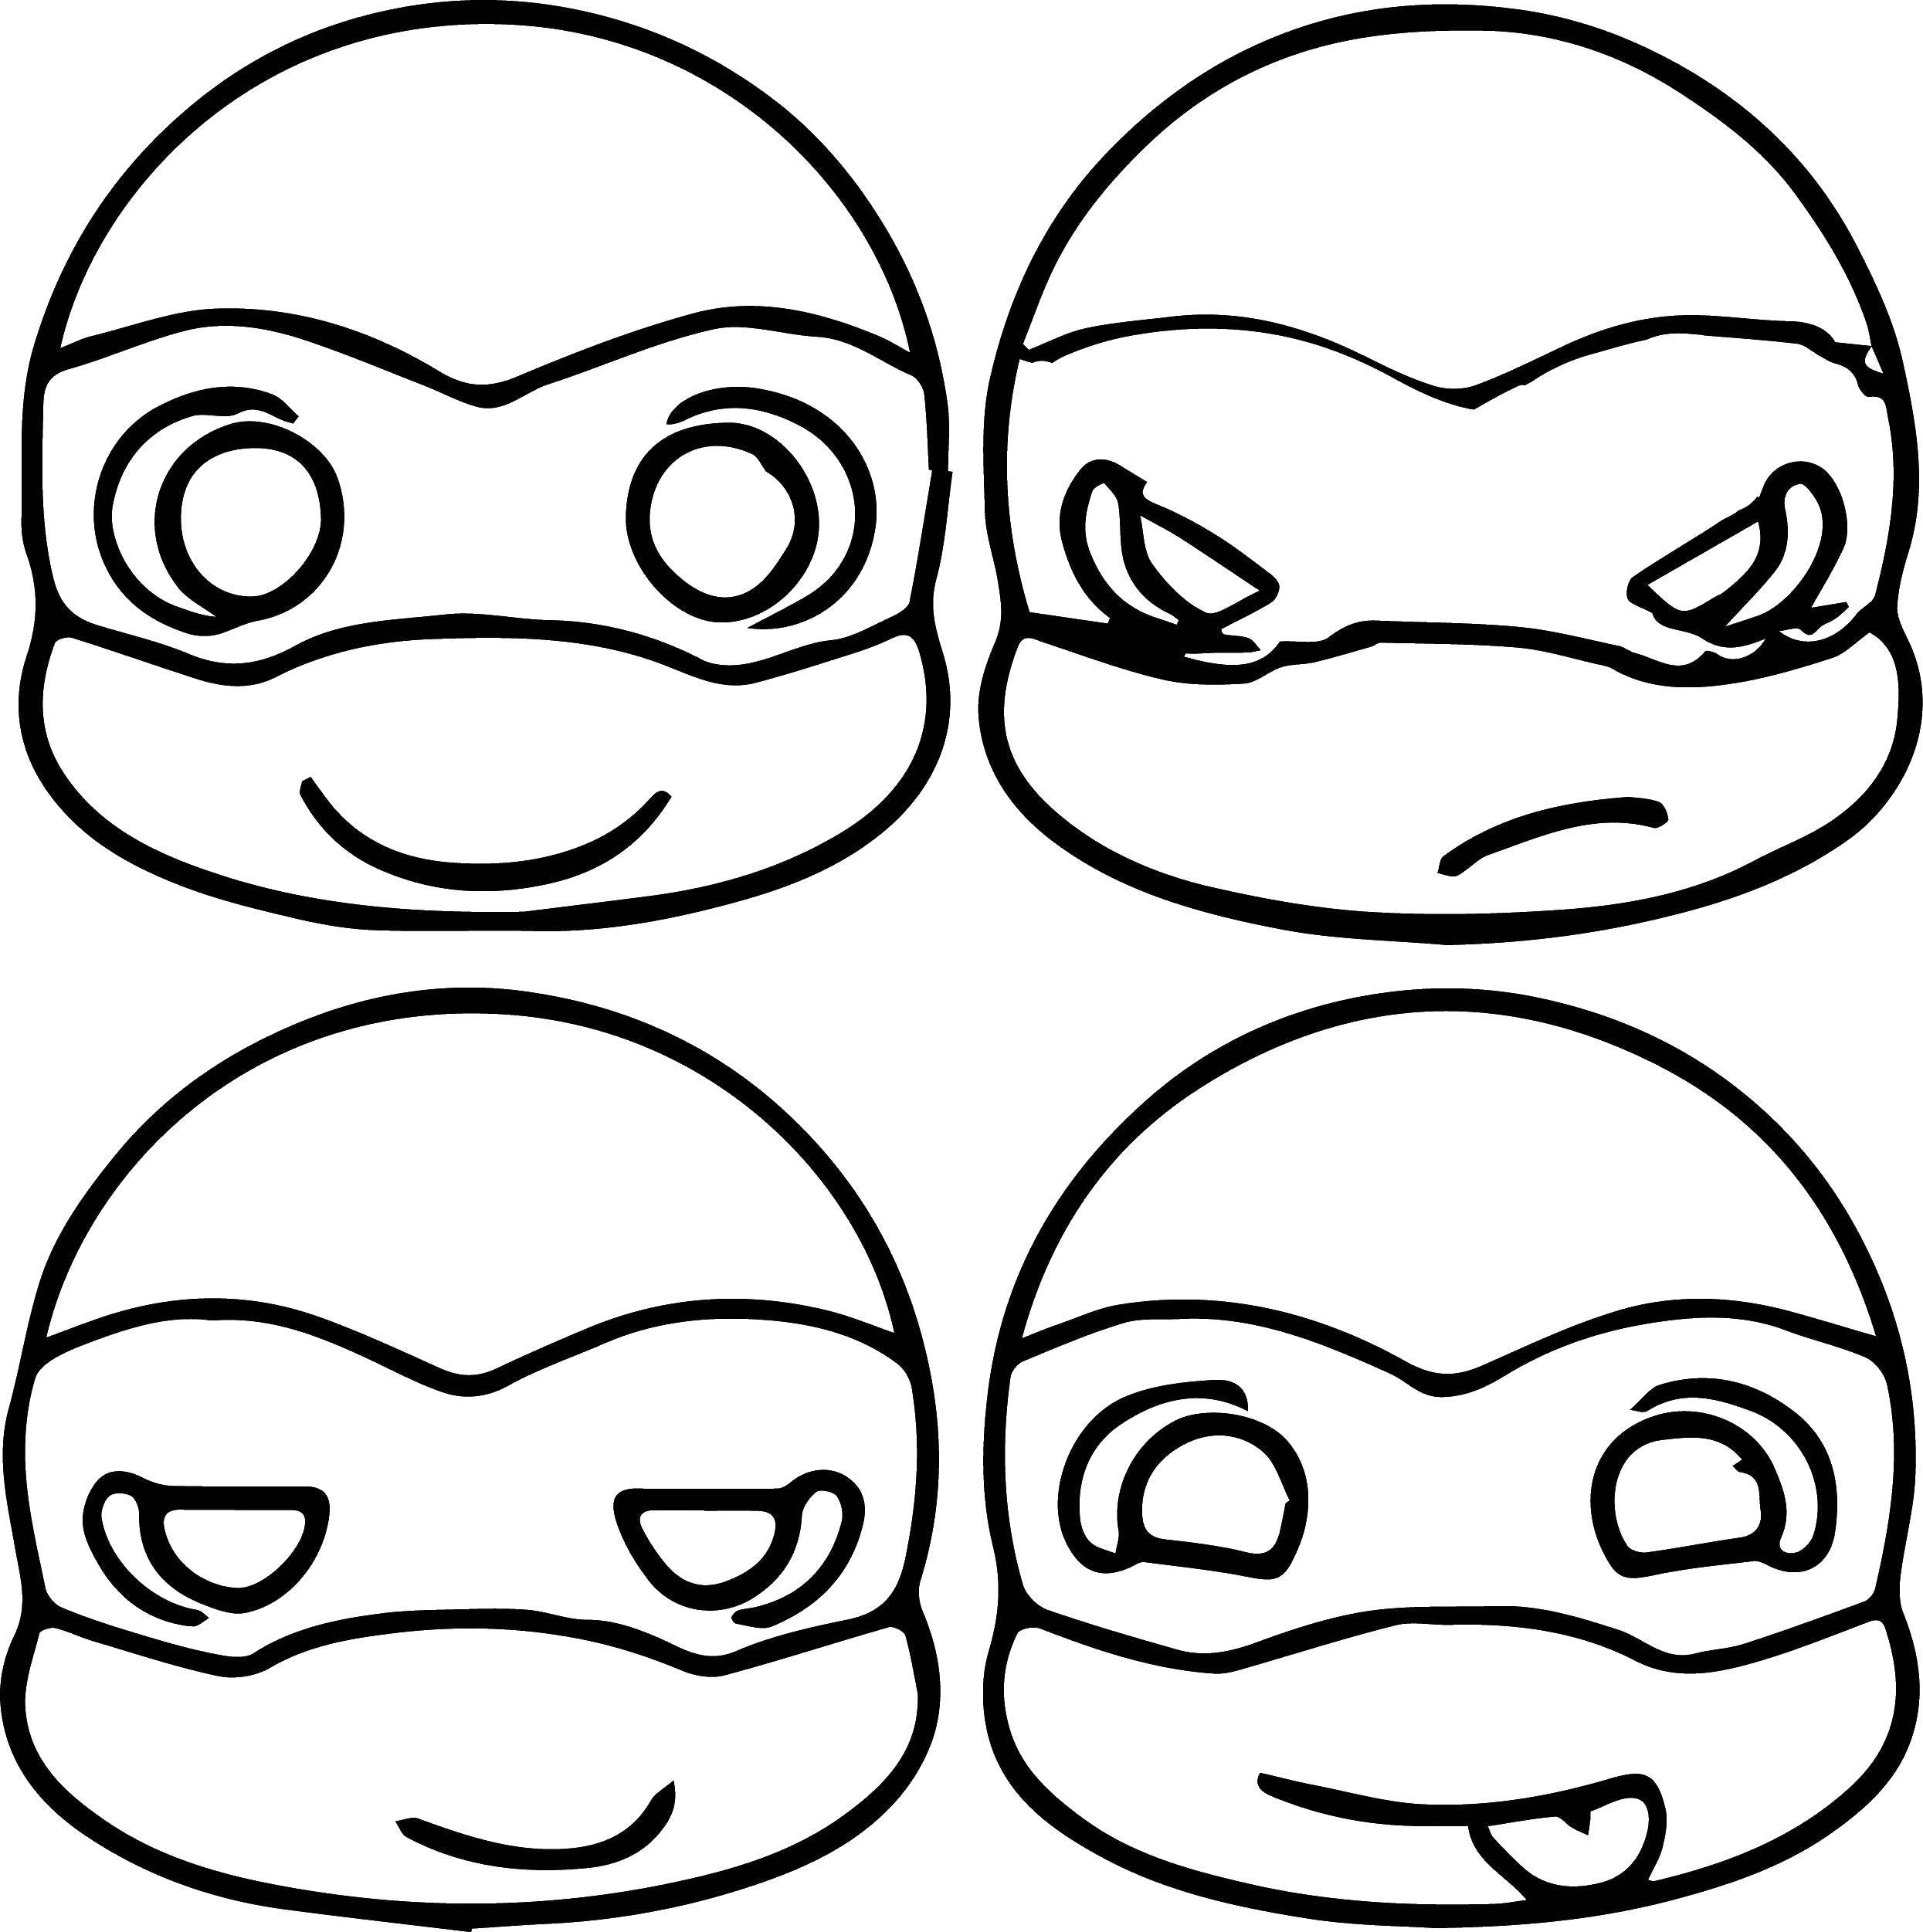 Coloring Head ninja turtles. Category teenage mutant ninja turtles. Tags:  head, mask, turtle, ninja.